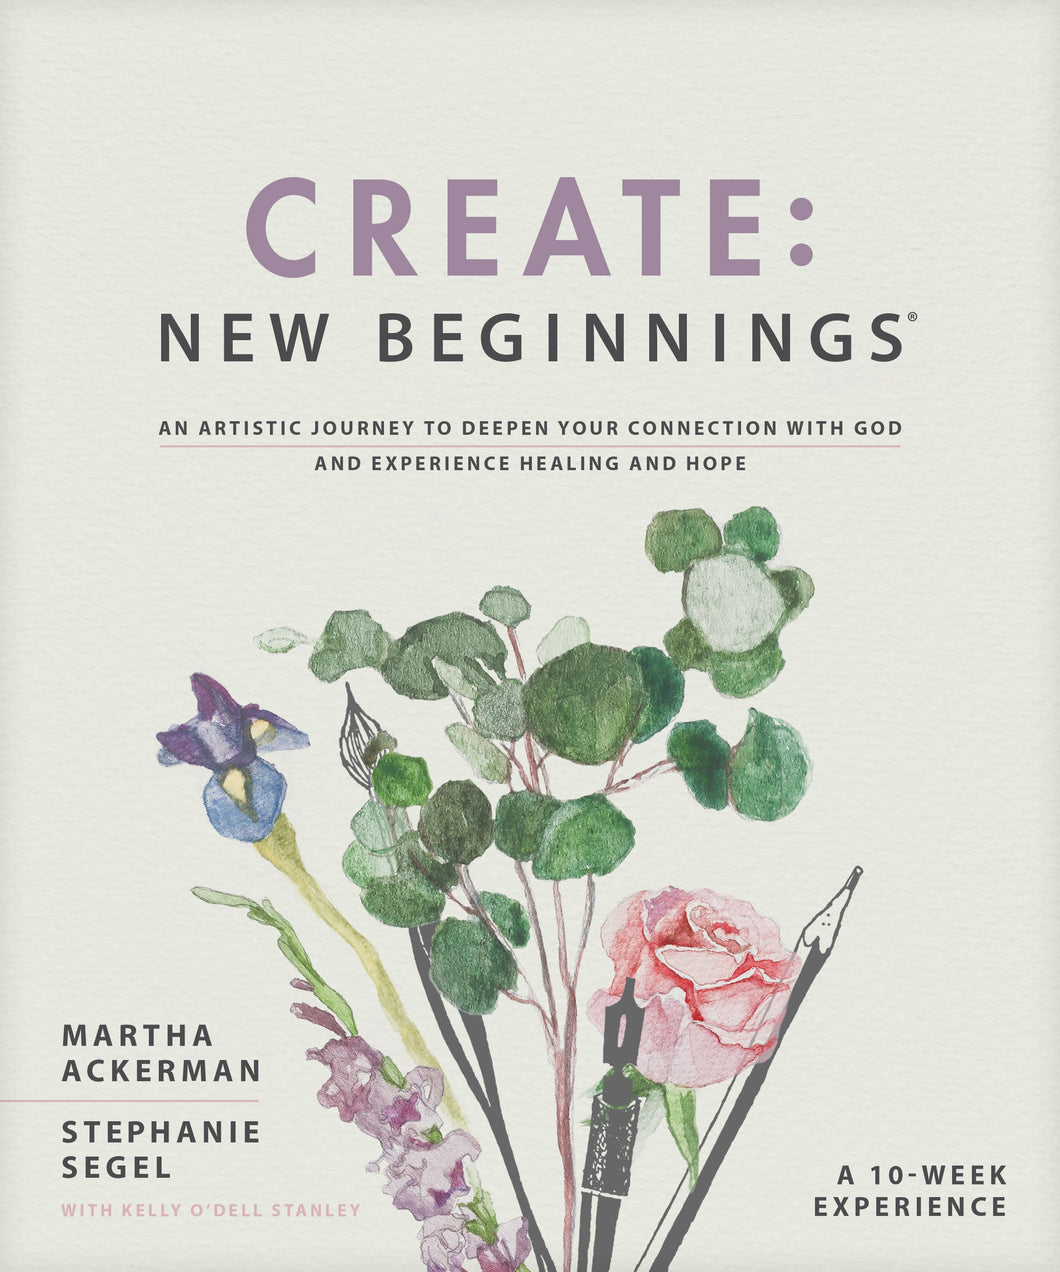 Create: New Beginnings